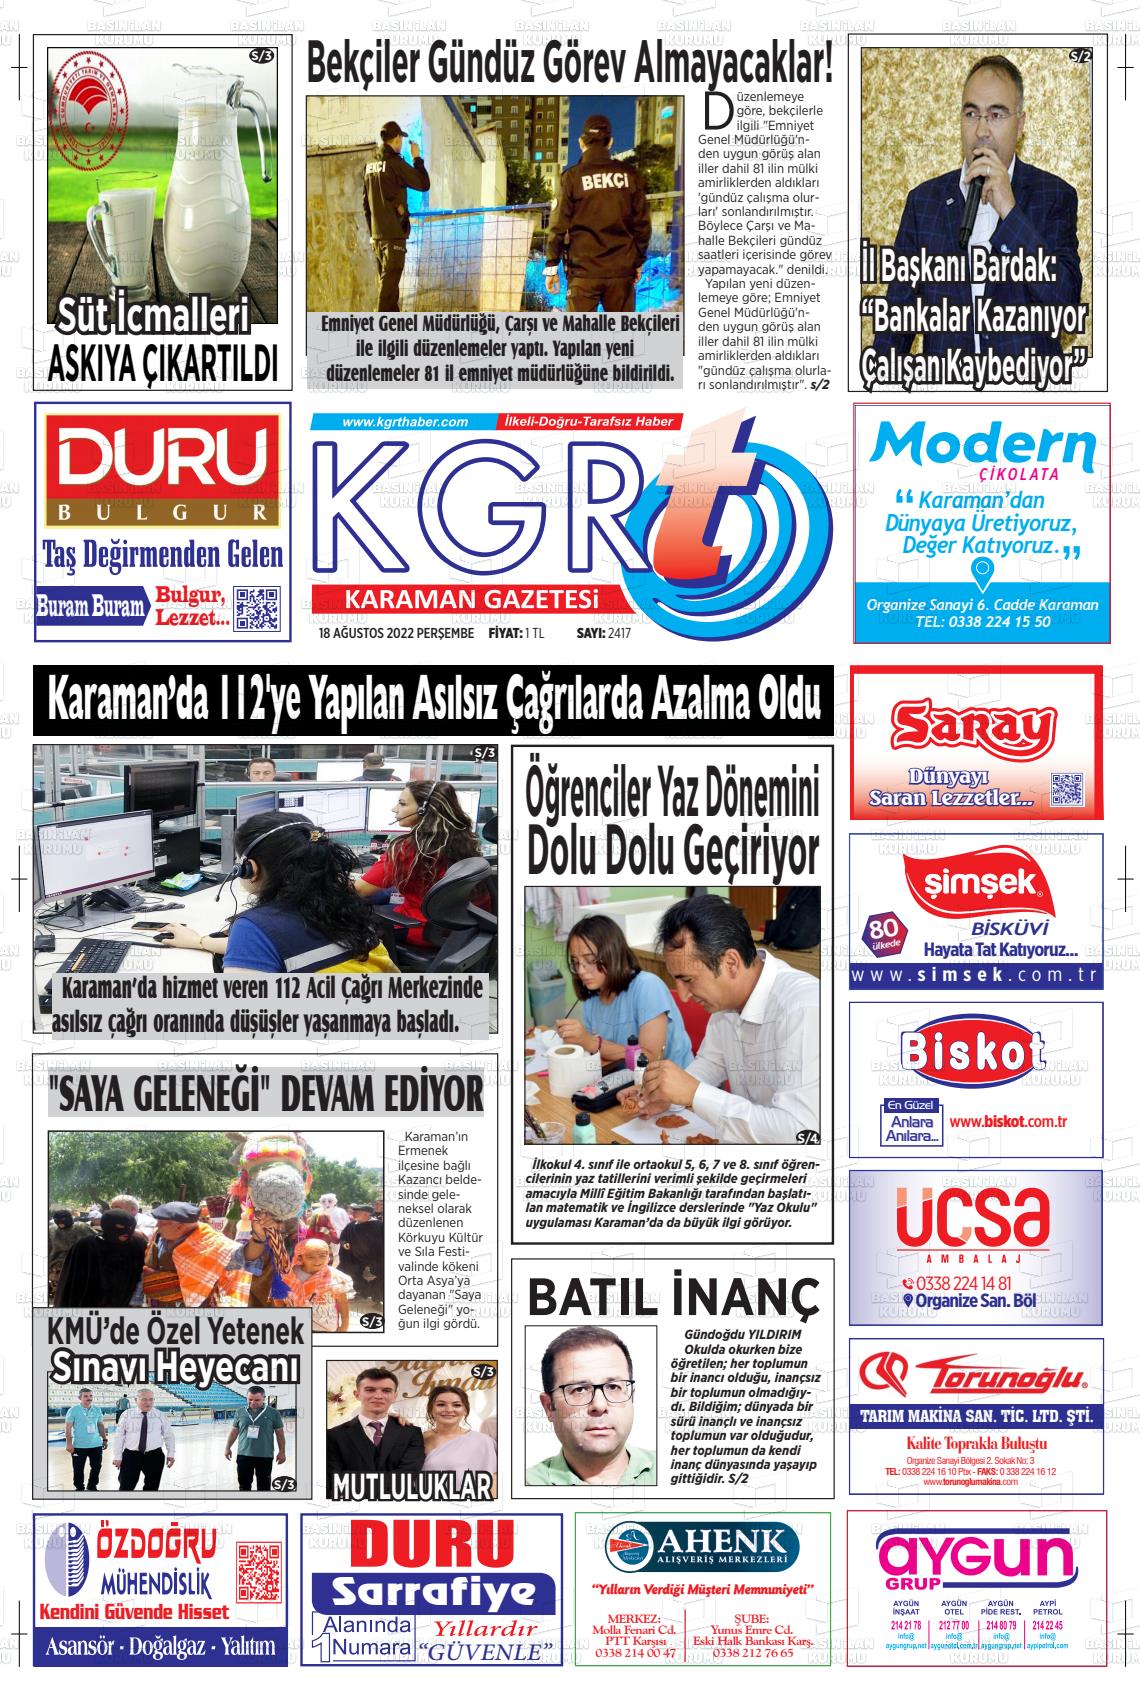 18 Ağustos 2022 Kgrt Karaman Gazete Manşeti